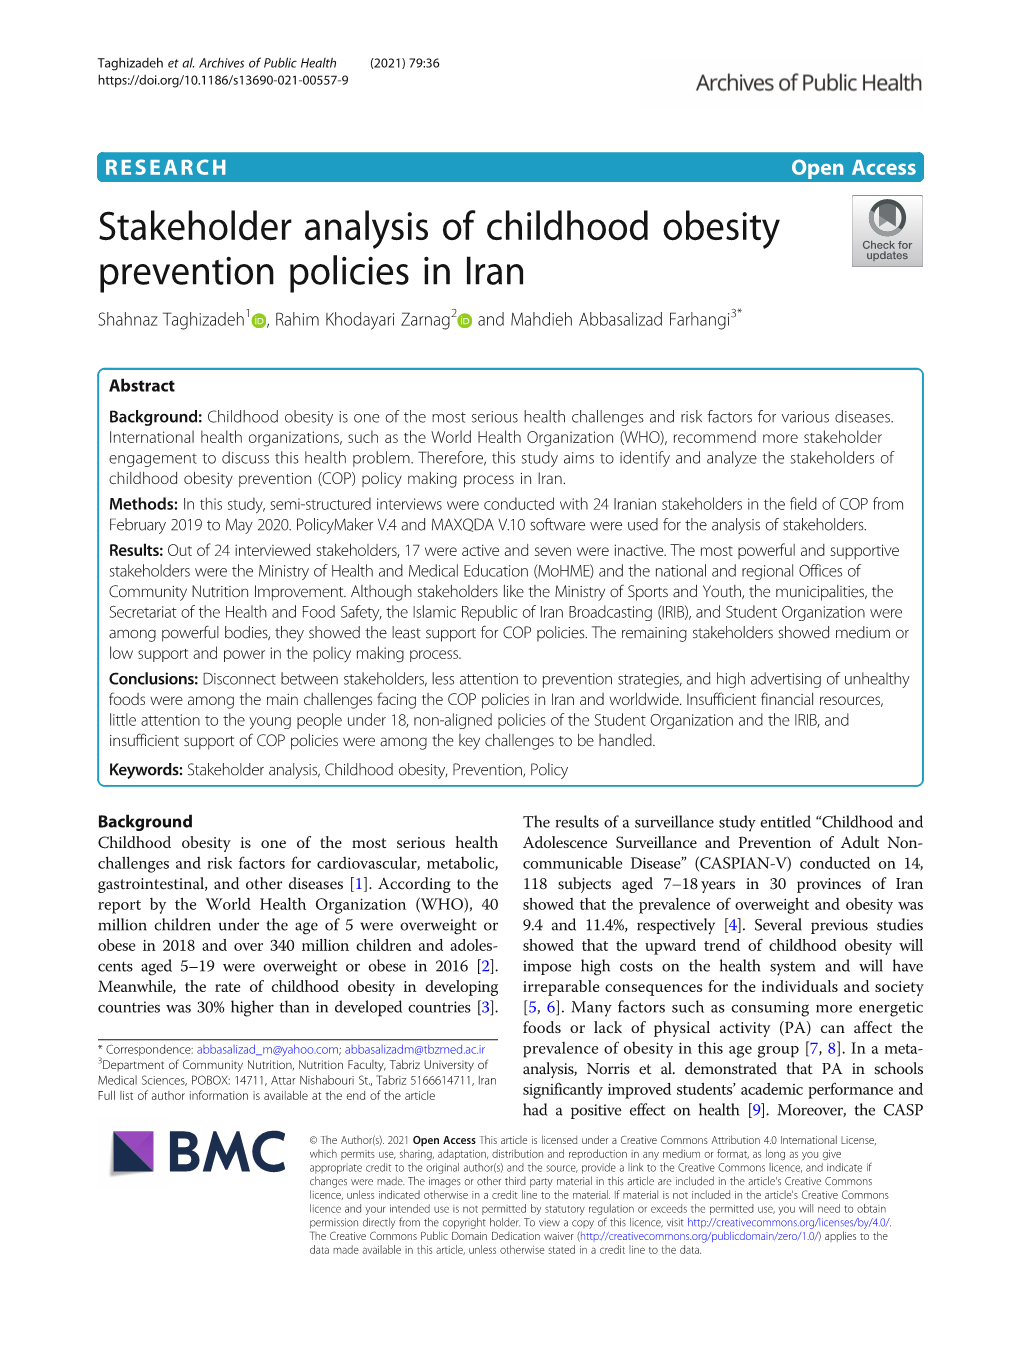 Stakeholder Analysis of Childhood Obesity Prevention Policies in Iran Shahnaz Taghizadeh1 , Rahim Khodayari Zarnag2 and Mahdieh Abbasalizad Farhangi3*